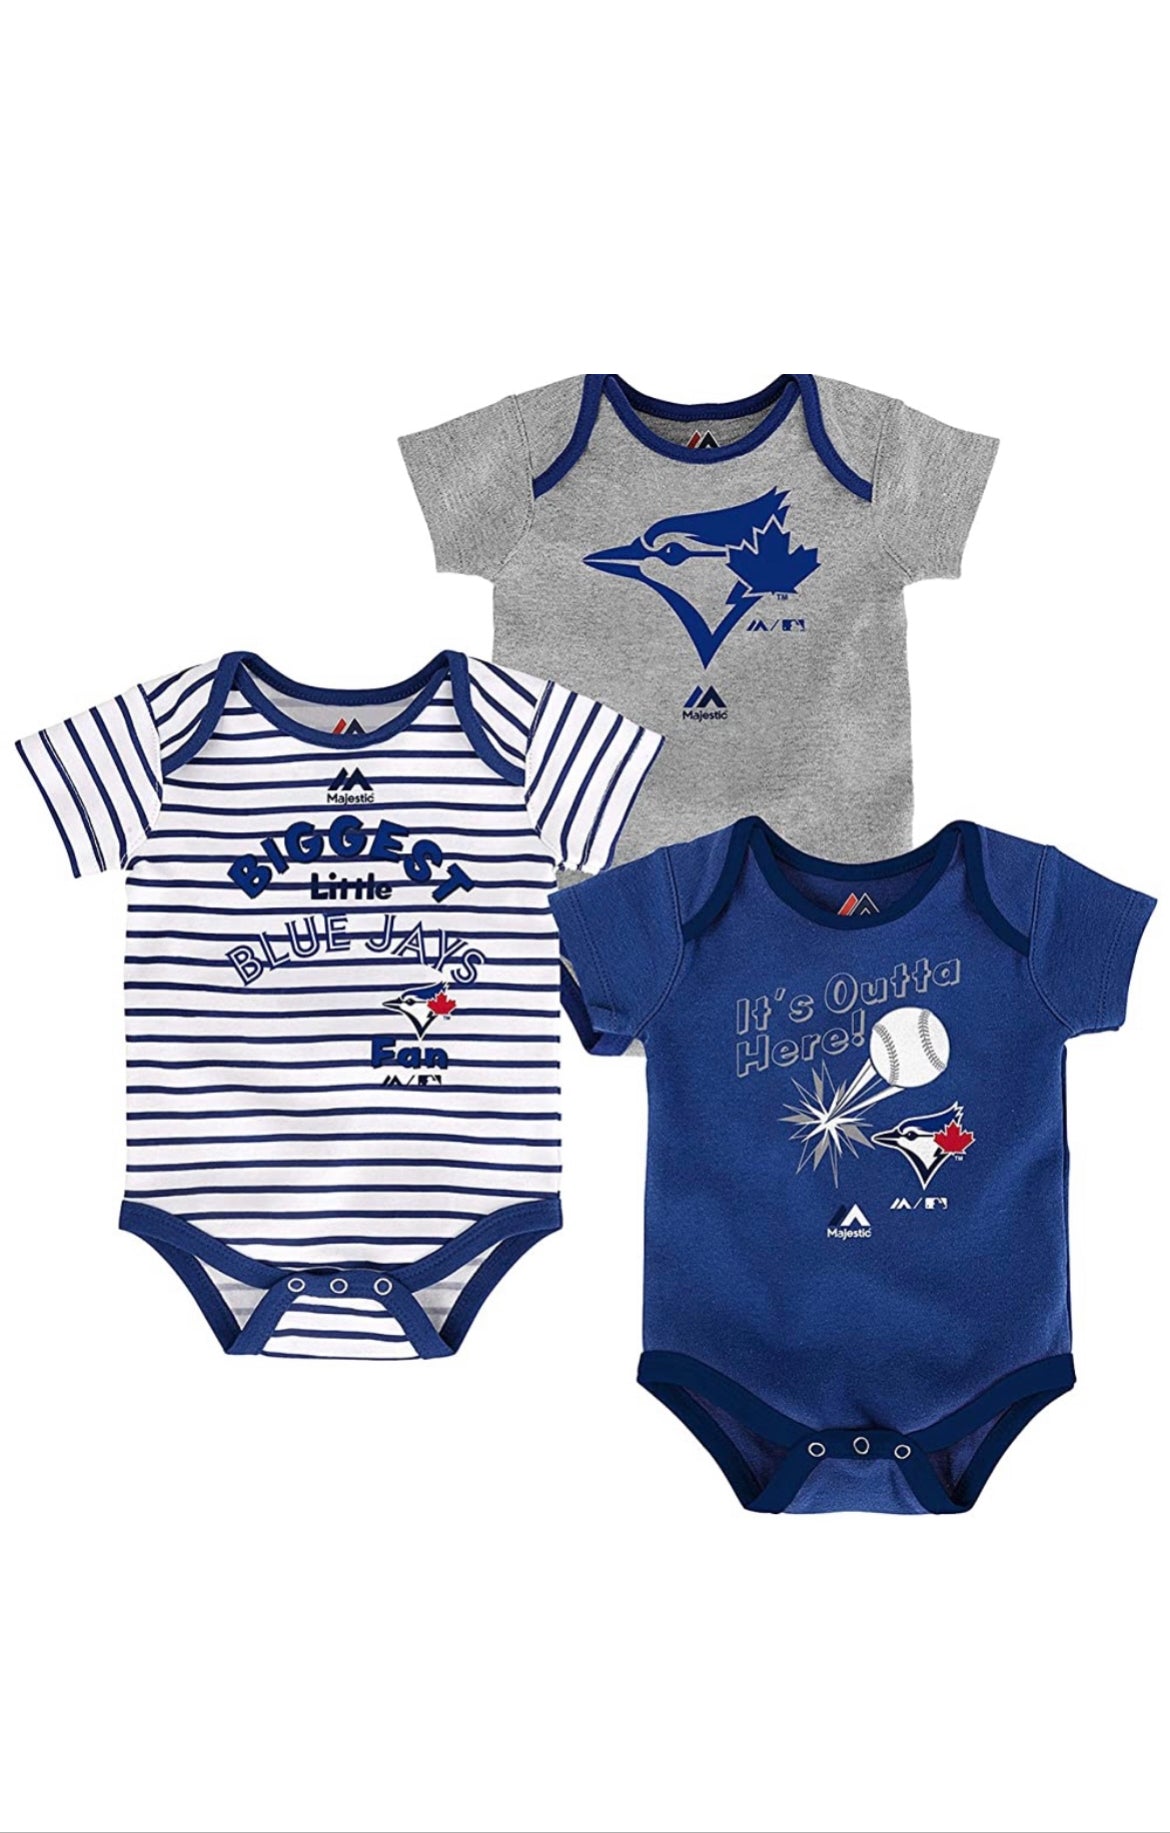 toronto blue jays infant apparel